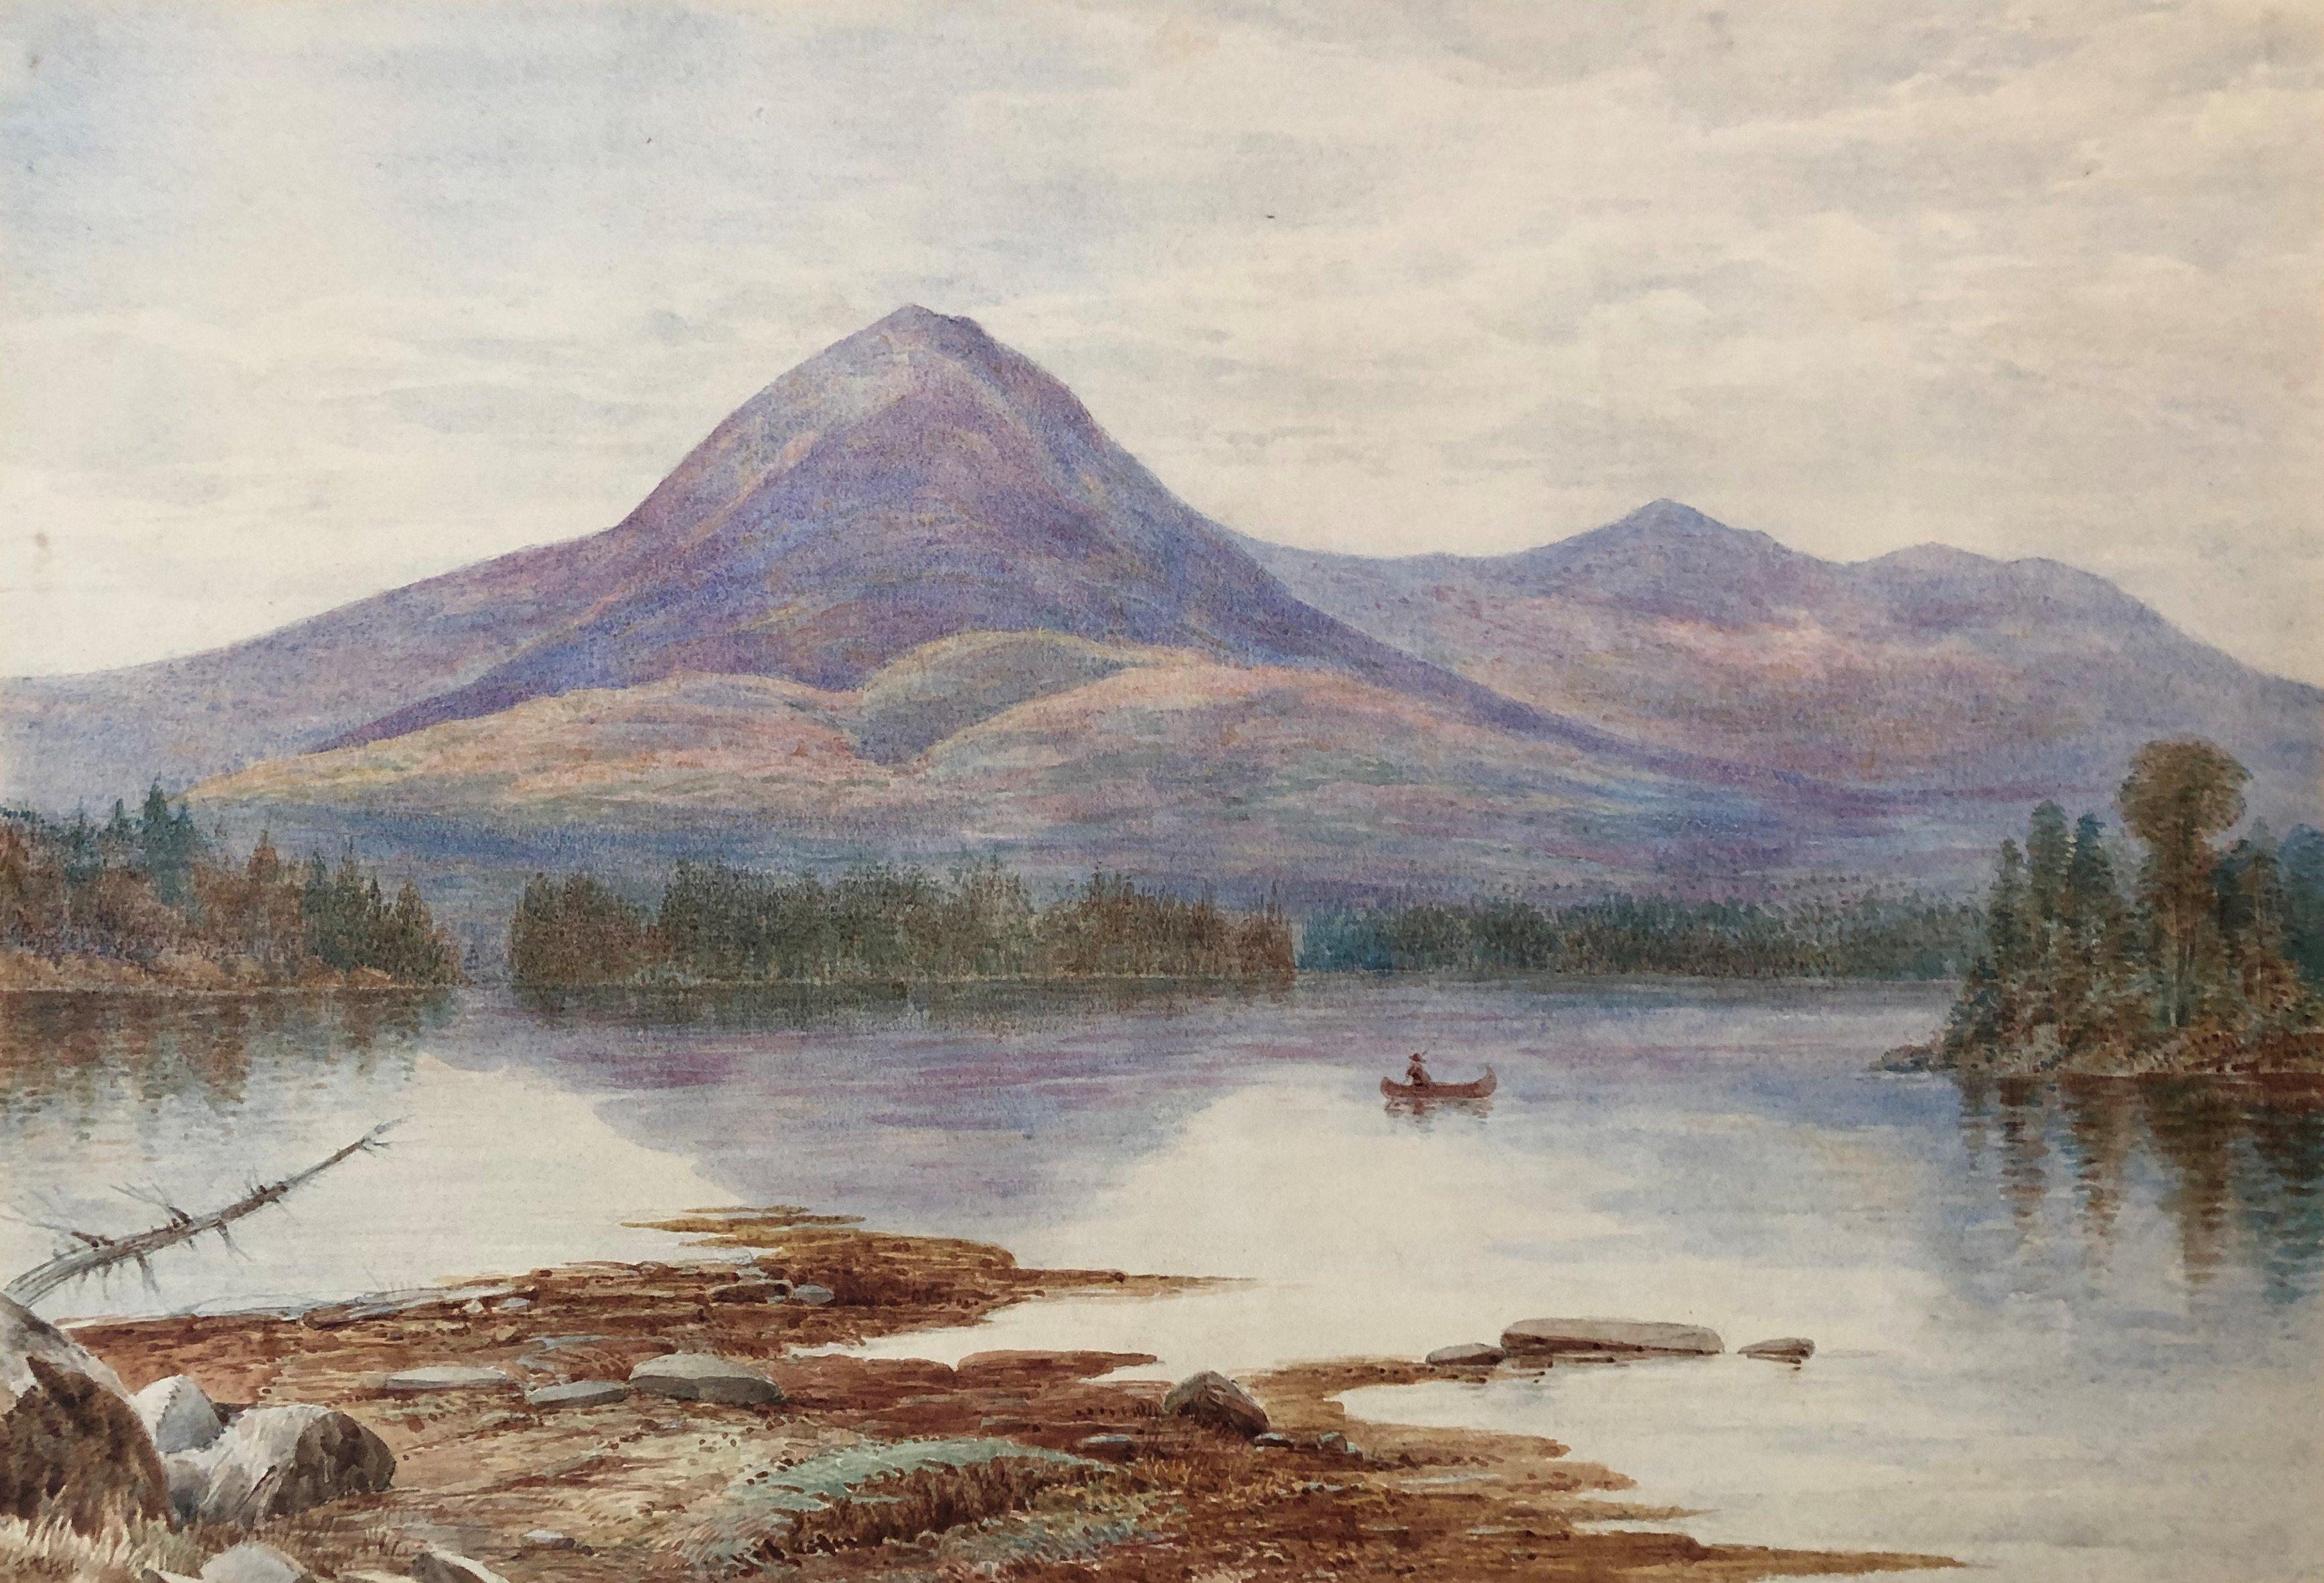 John William Hill Landscape Art - "Lake George, Adirondack Mountains" Hudson River School, Pre-Raphaelite